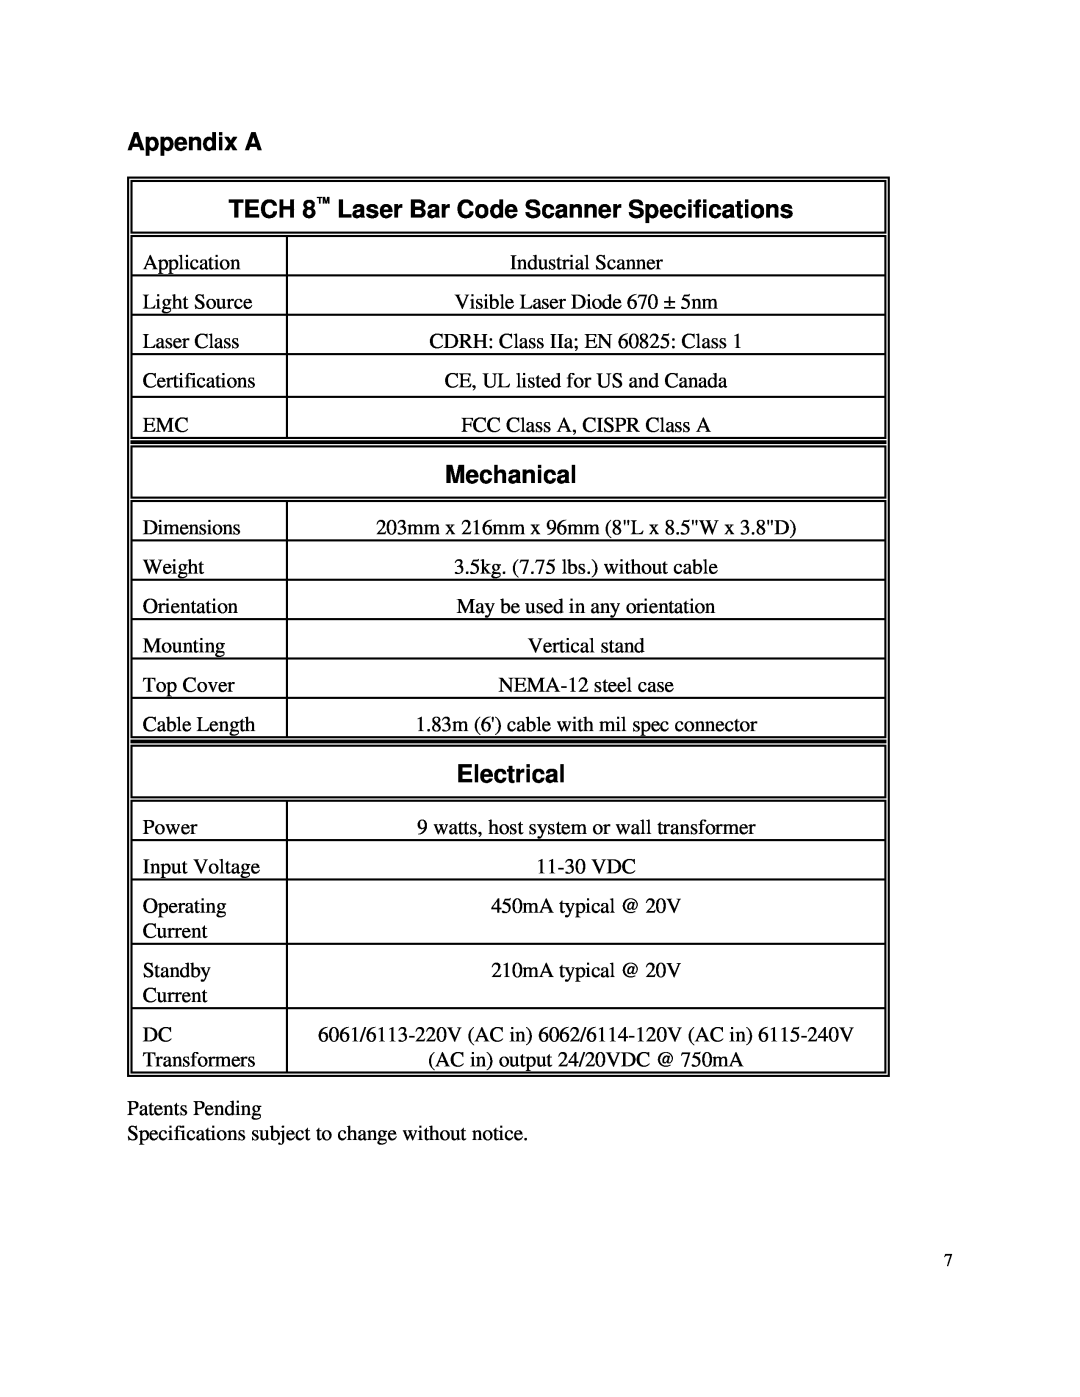 Metrologic Instruments manual Appendix A TECH 8 Laser Bar Code Scanner Specifications, Mechanical, Electrical 